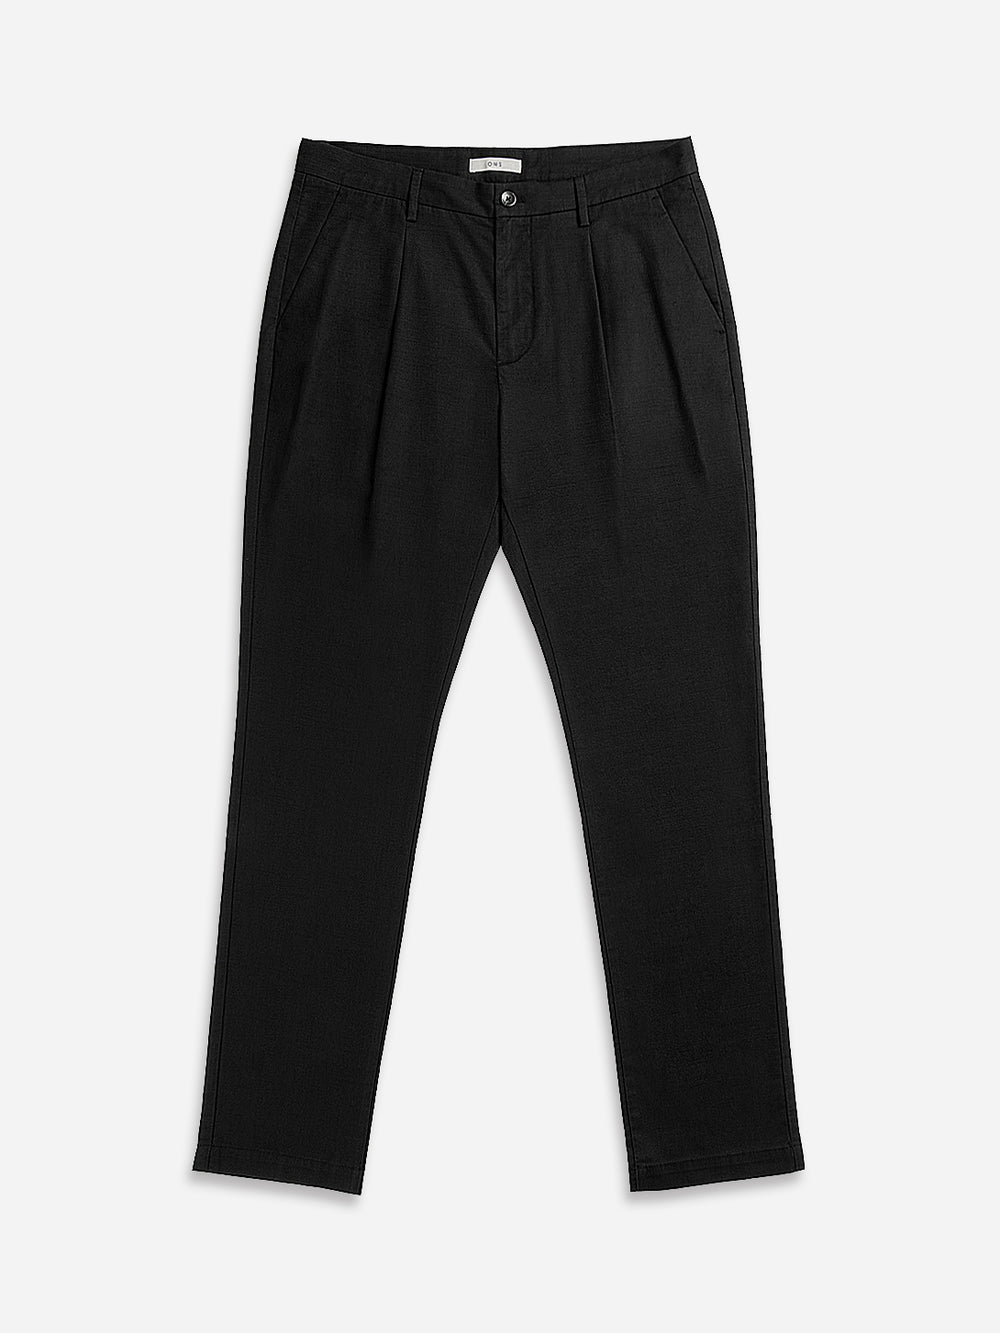 Mens Classic Pants Sweatpants Pants Trousers Solid Black Xl